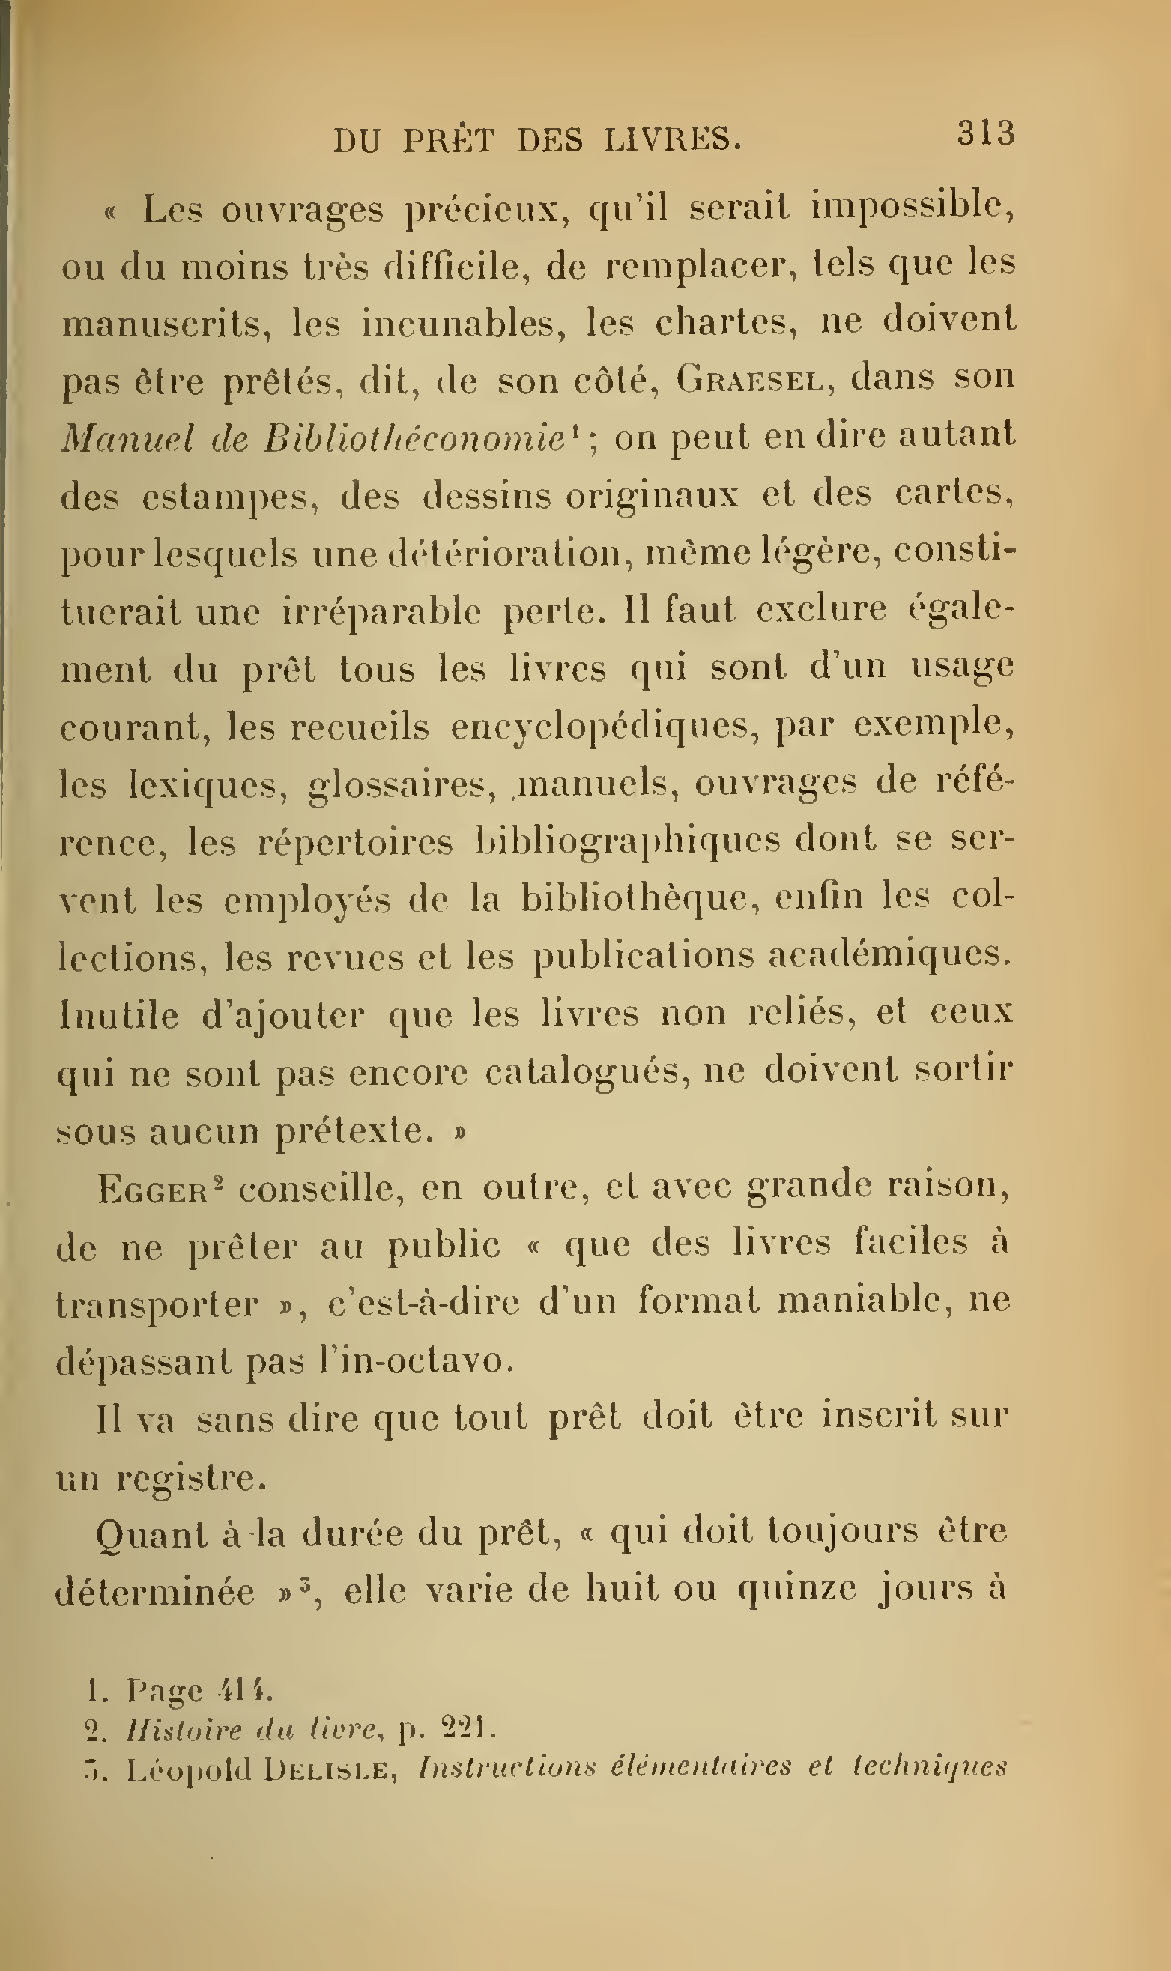 Albert Cim, Le Livre, t. II, p. 313.